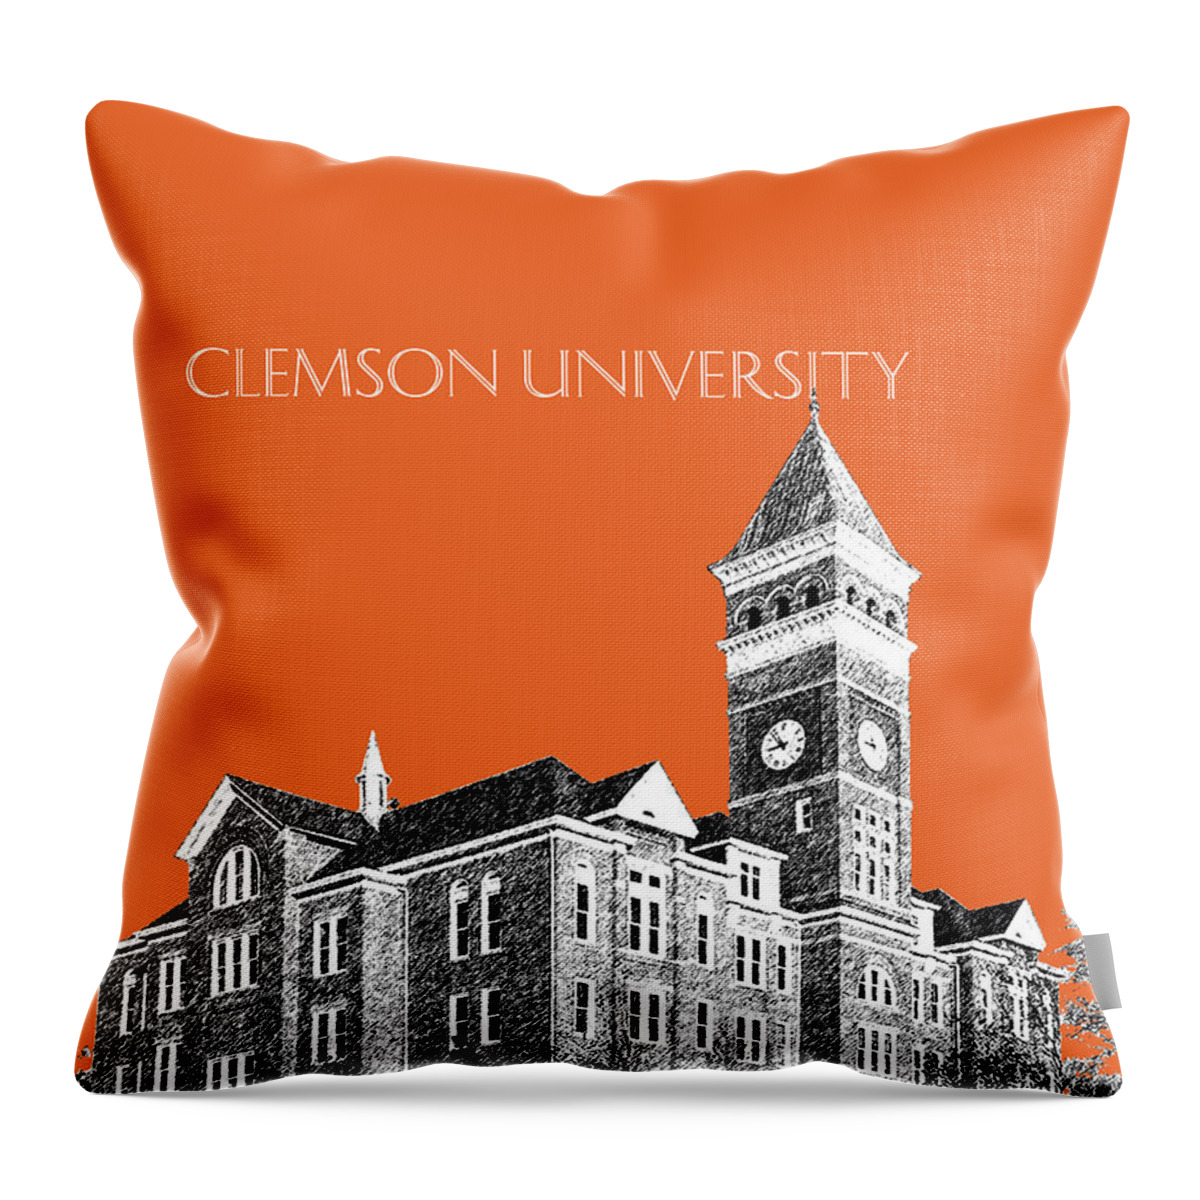 University Throw Pillow featuring the digital art Clemson University - Coral by DB Artist